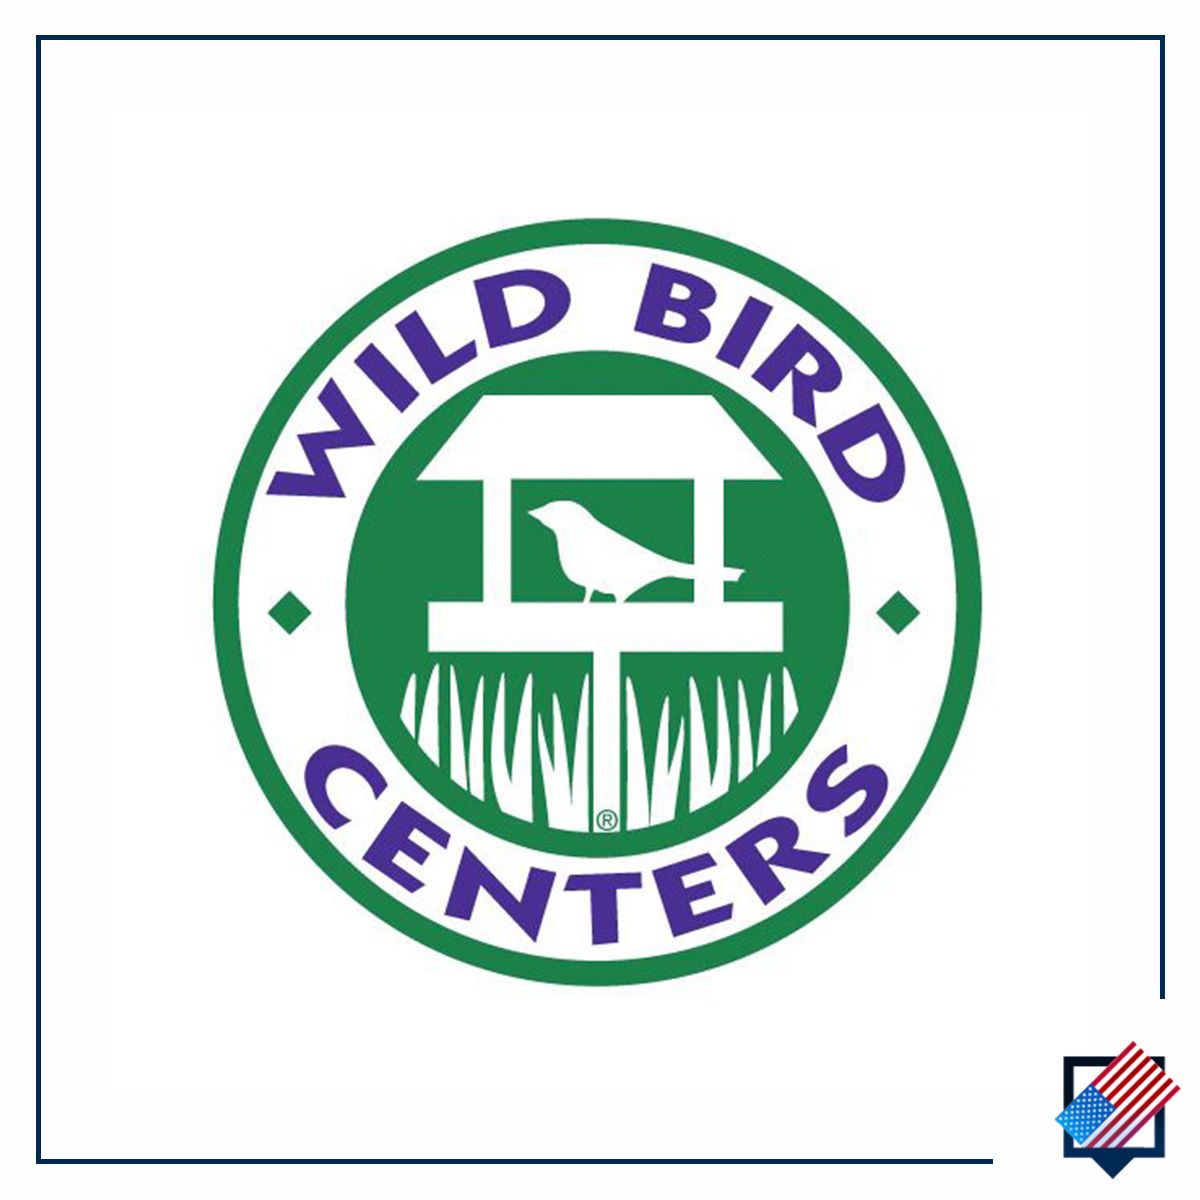 Wild Birds Centers of America